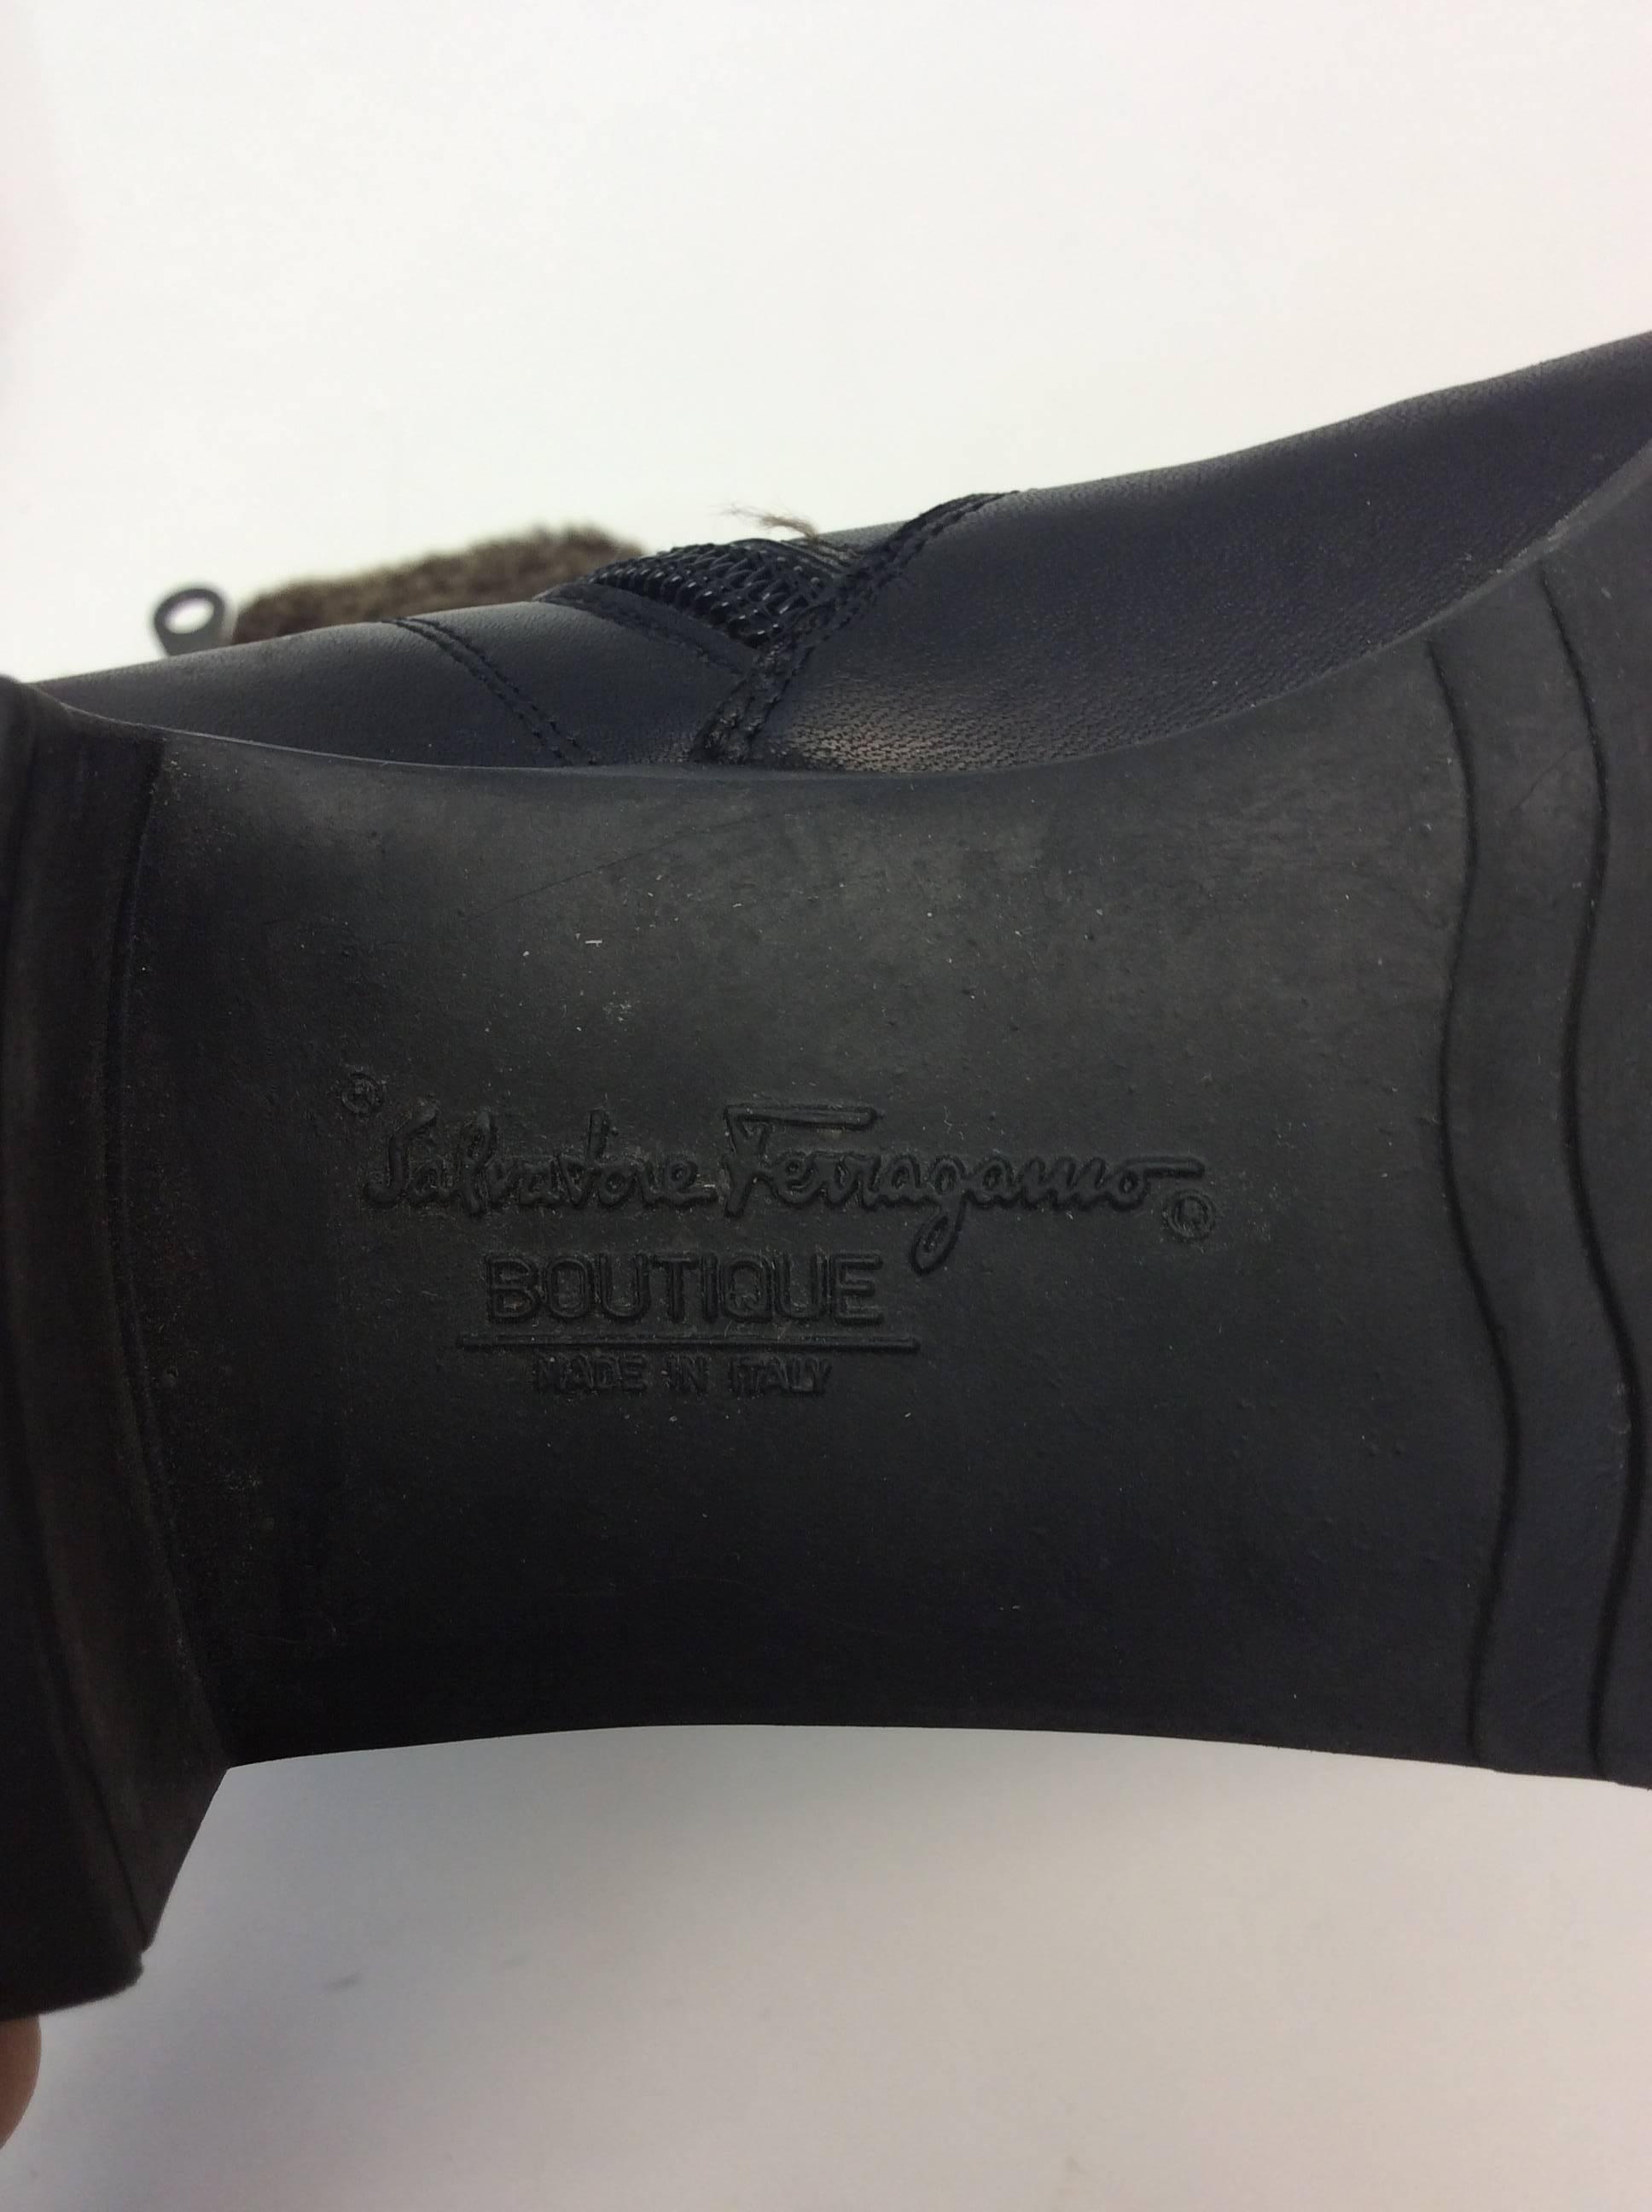 Salvatore Ferragamo Black Leather and Shearling Boot For Sale 2